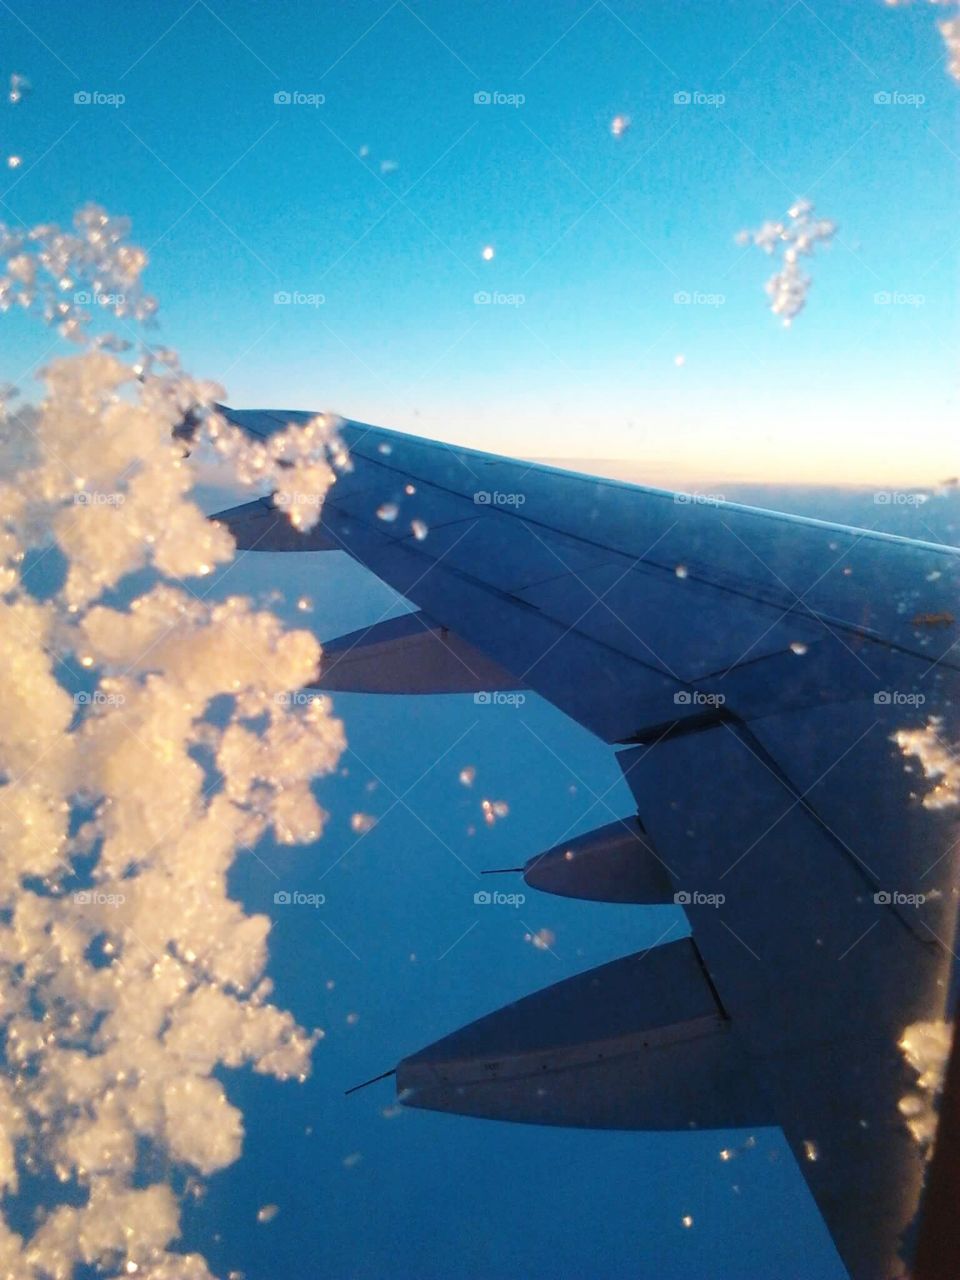 ice on the airplane window